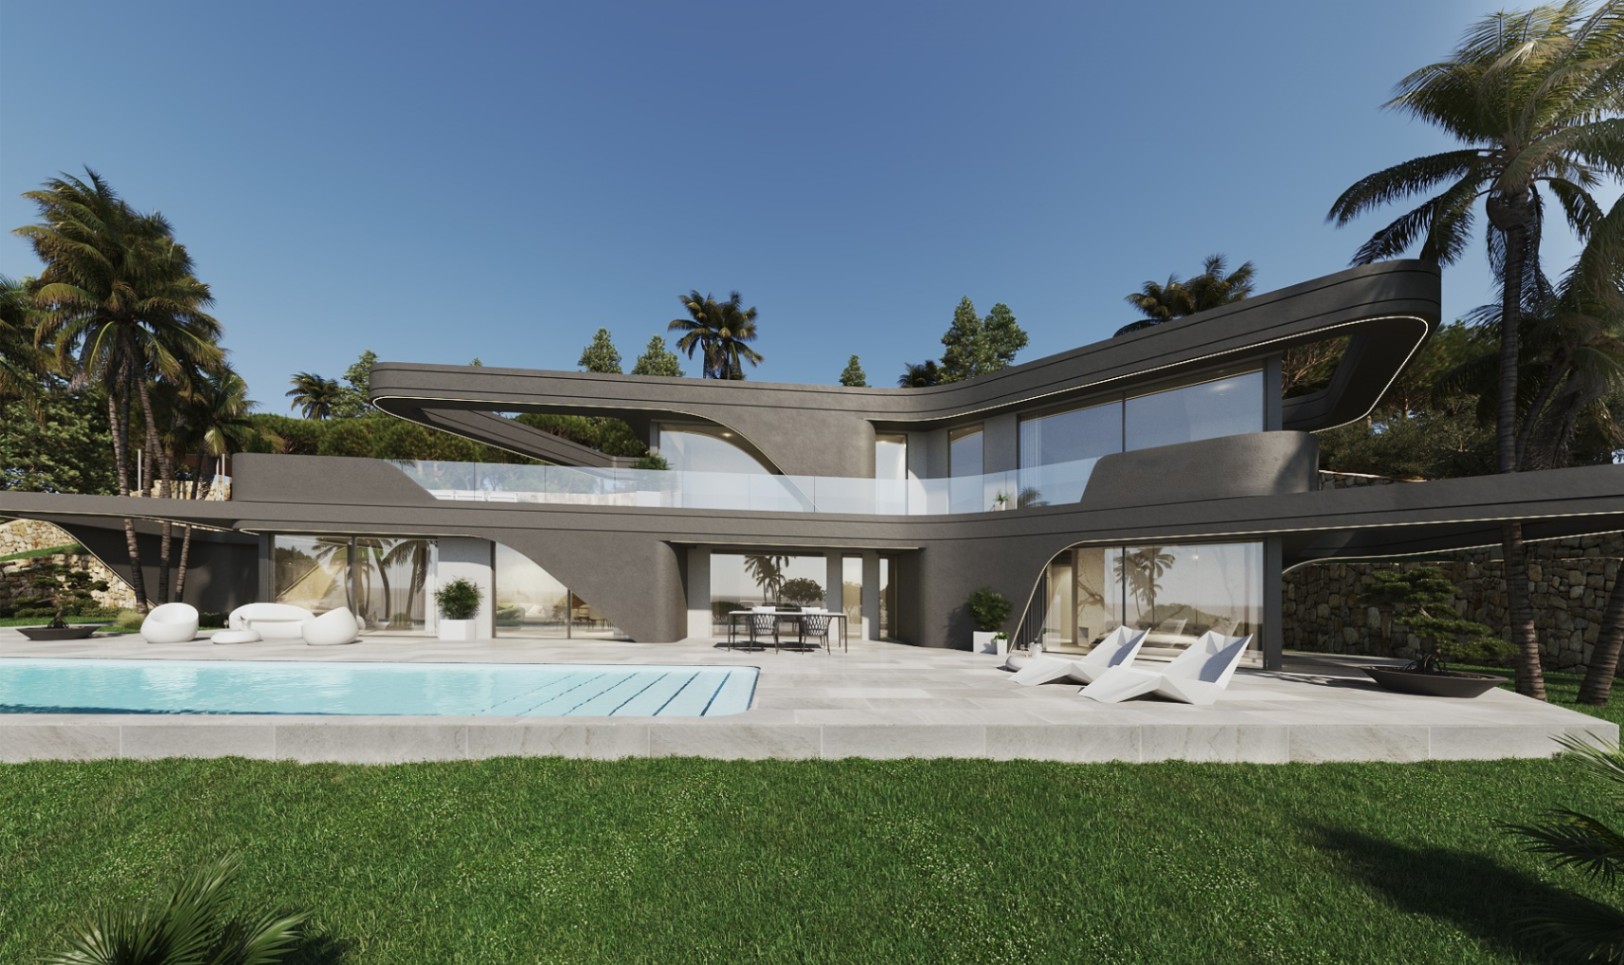 Villa moderna de diseño vanguardista en Javea